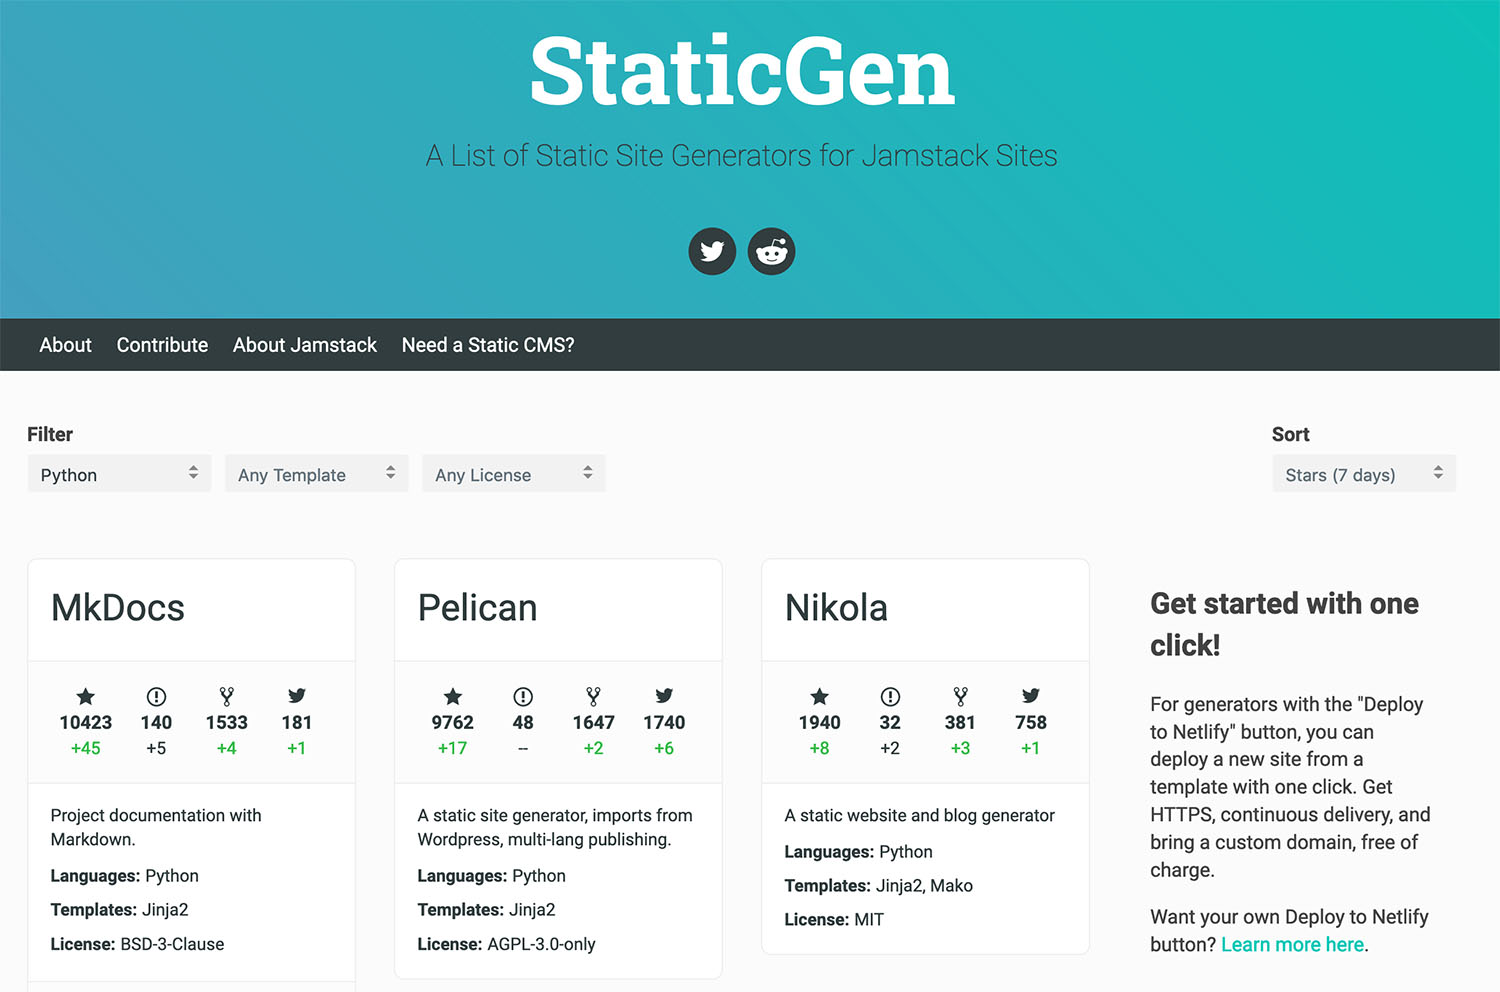 Choosing a statis site generator on StaticGen